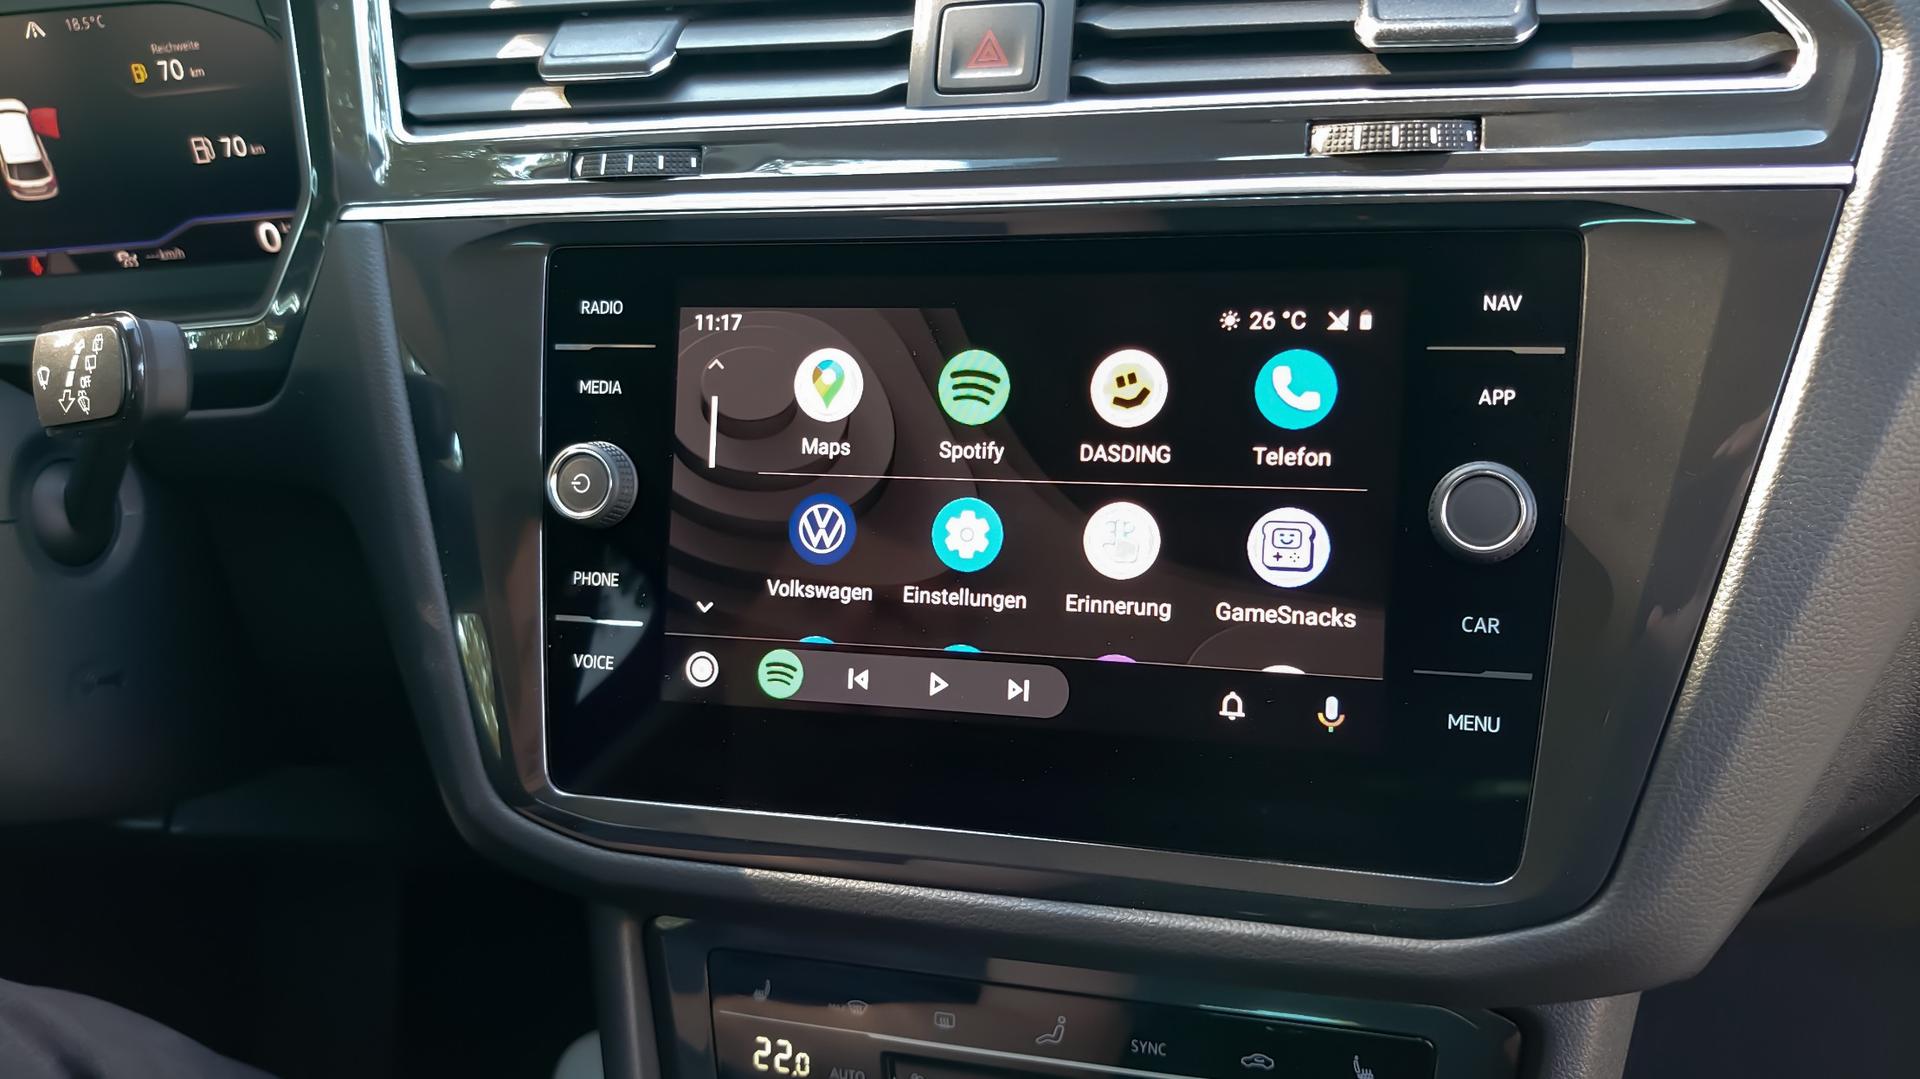 VW Tiguan Infotainment Display mit Android Auto - Auto mit Smartphone verbinden - Discover Media